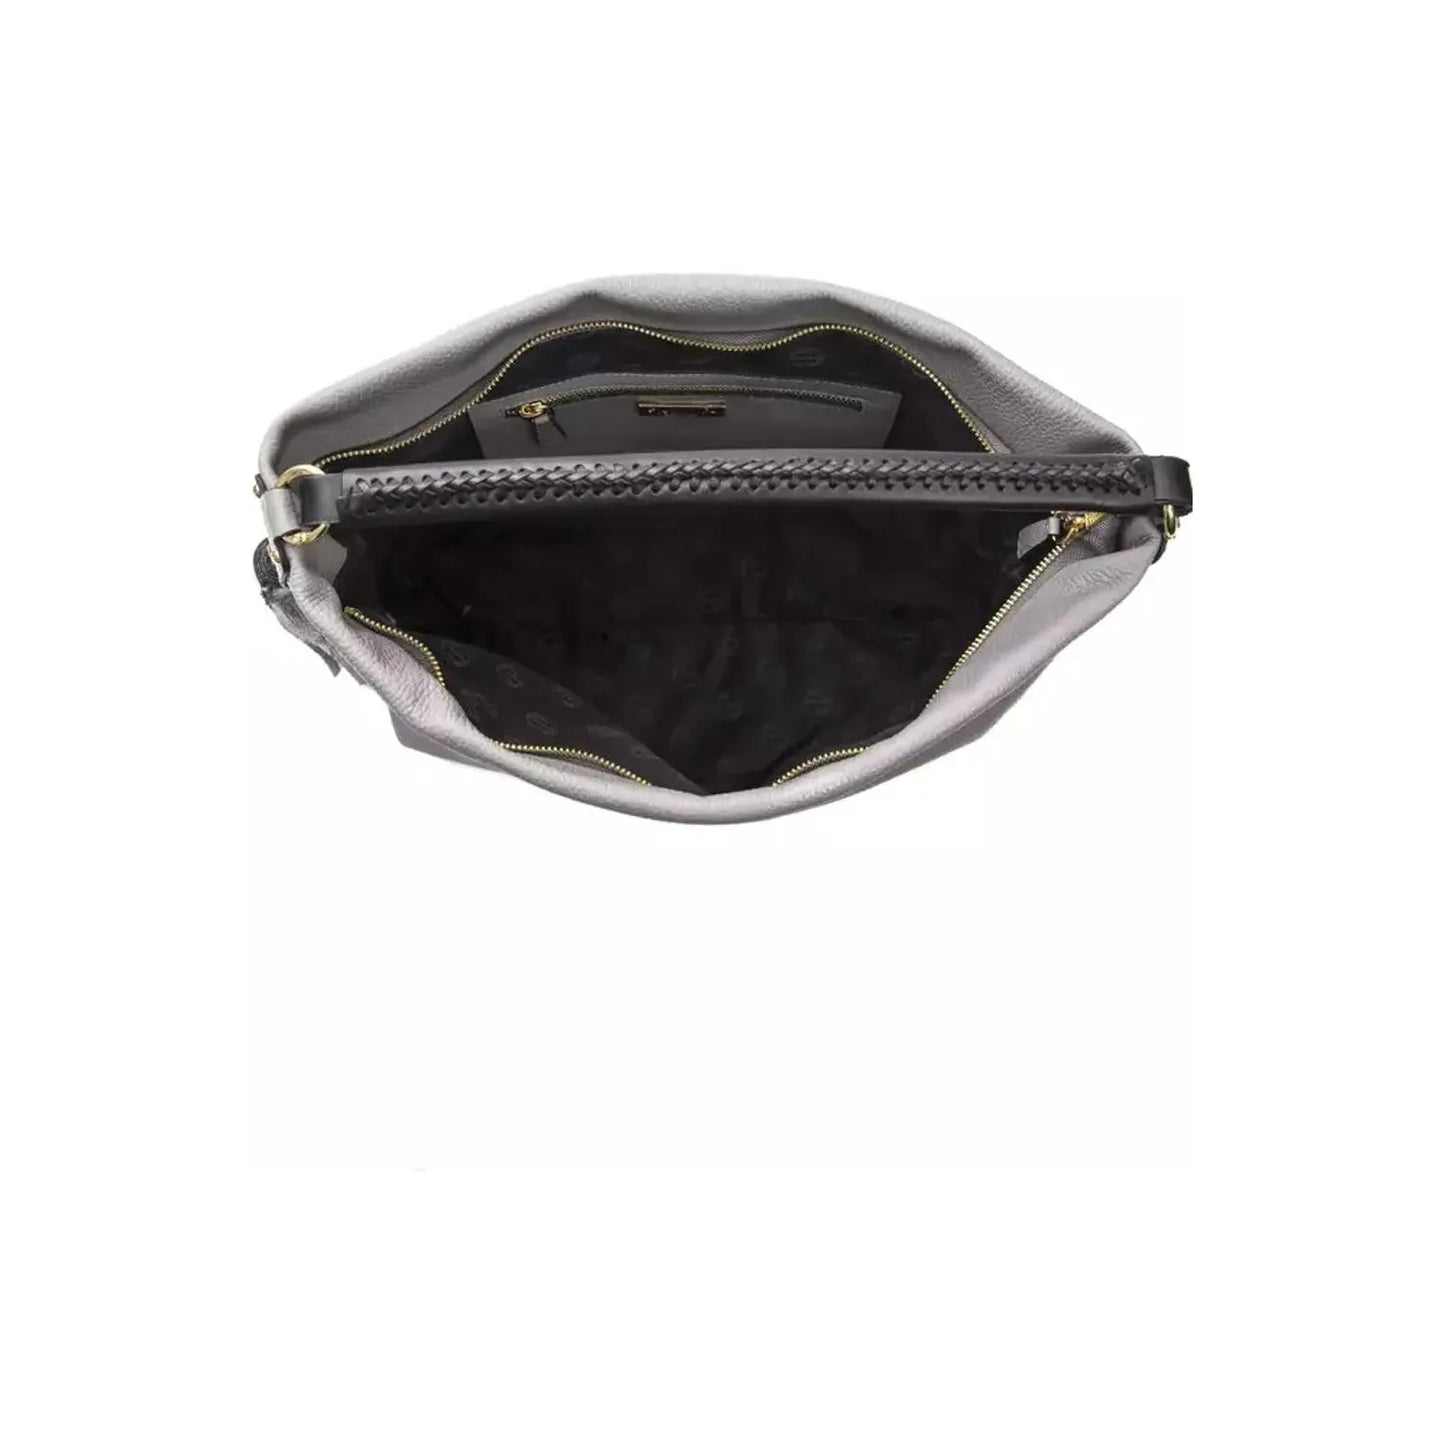 Pompei Donatella Chic Gray Leather Shoulder Bag gray-leather-shoulder-bag-2 WOMAN SHOULDER BAGS stock_product_image_5800_1206850373-21-85fd3d38-718.webp